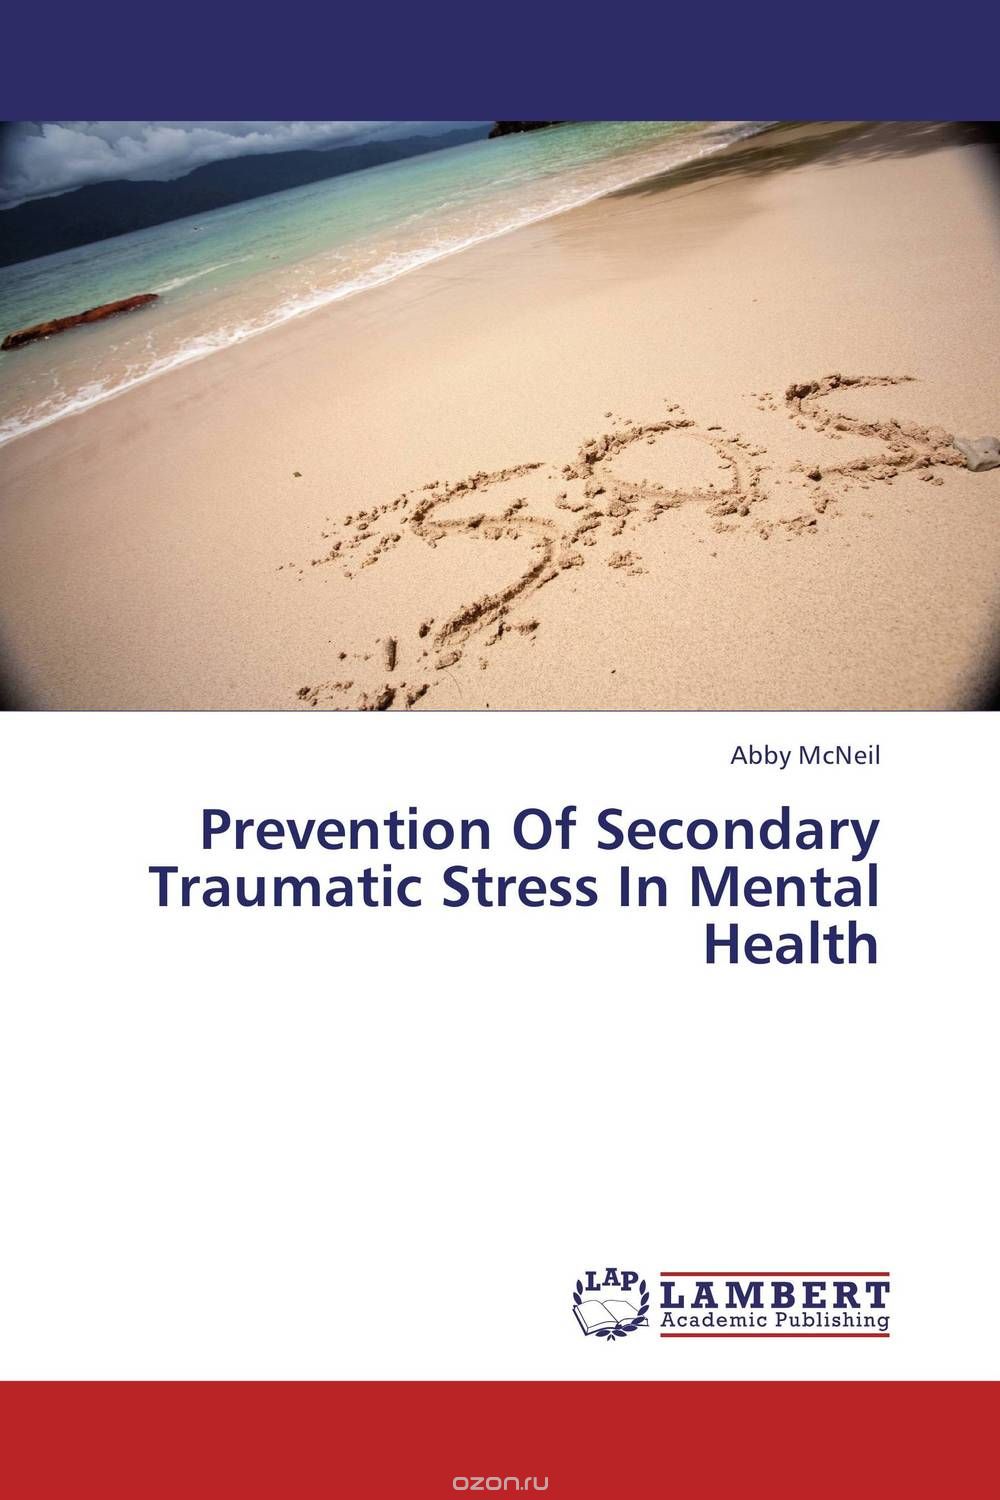 Скачать книгу "Prevention Of Secondary Traumatic Stress In Mental Health"